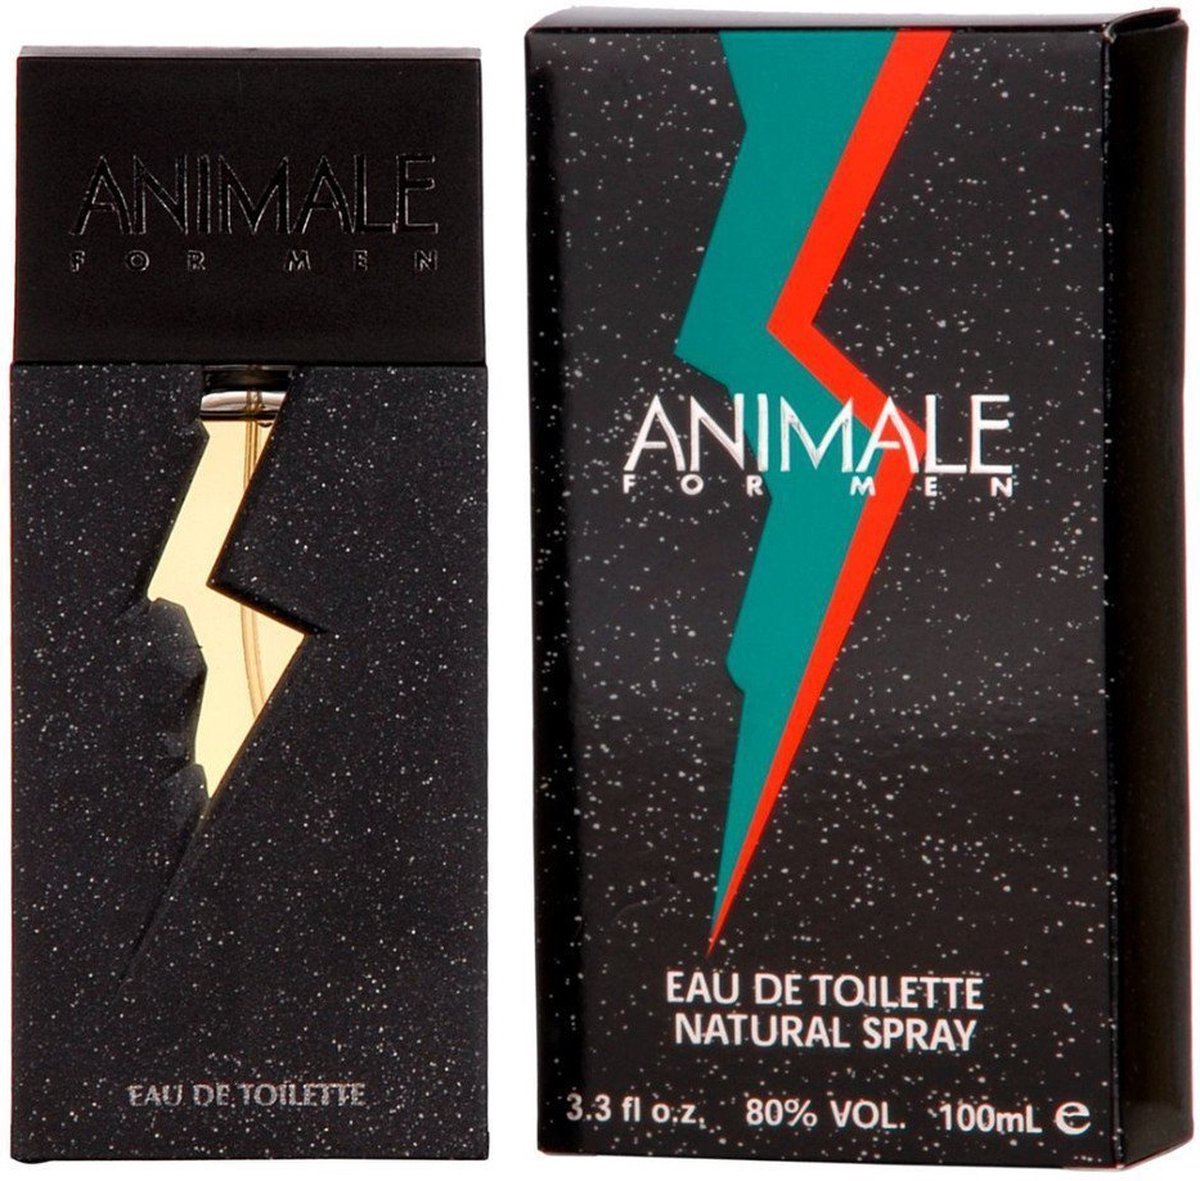 Animale Men - 100 ml - Eau de toilette